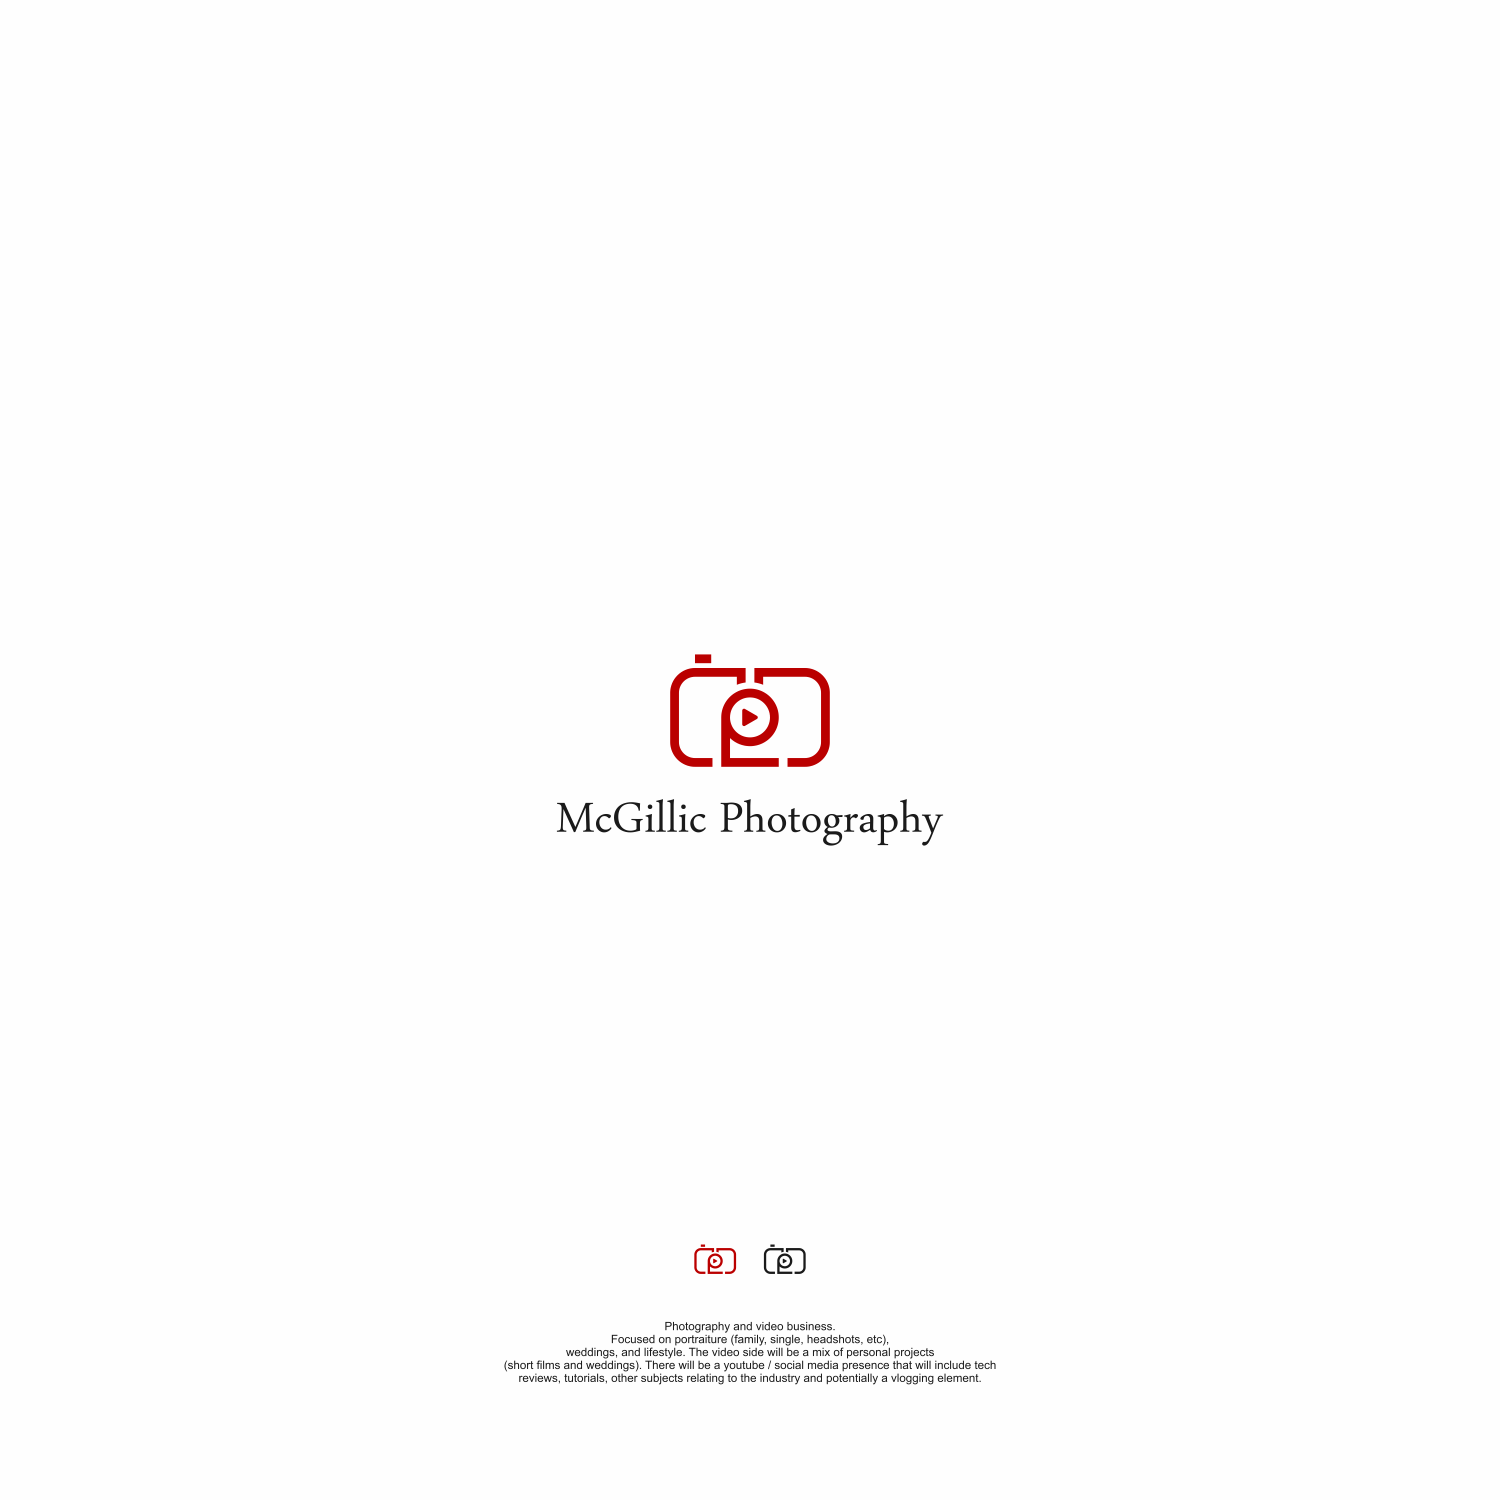 Single Social Media Company Logo - Conservative, Elegant Logo Design for McGillic Photography